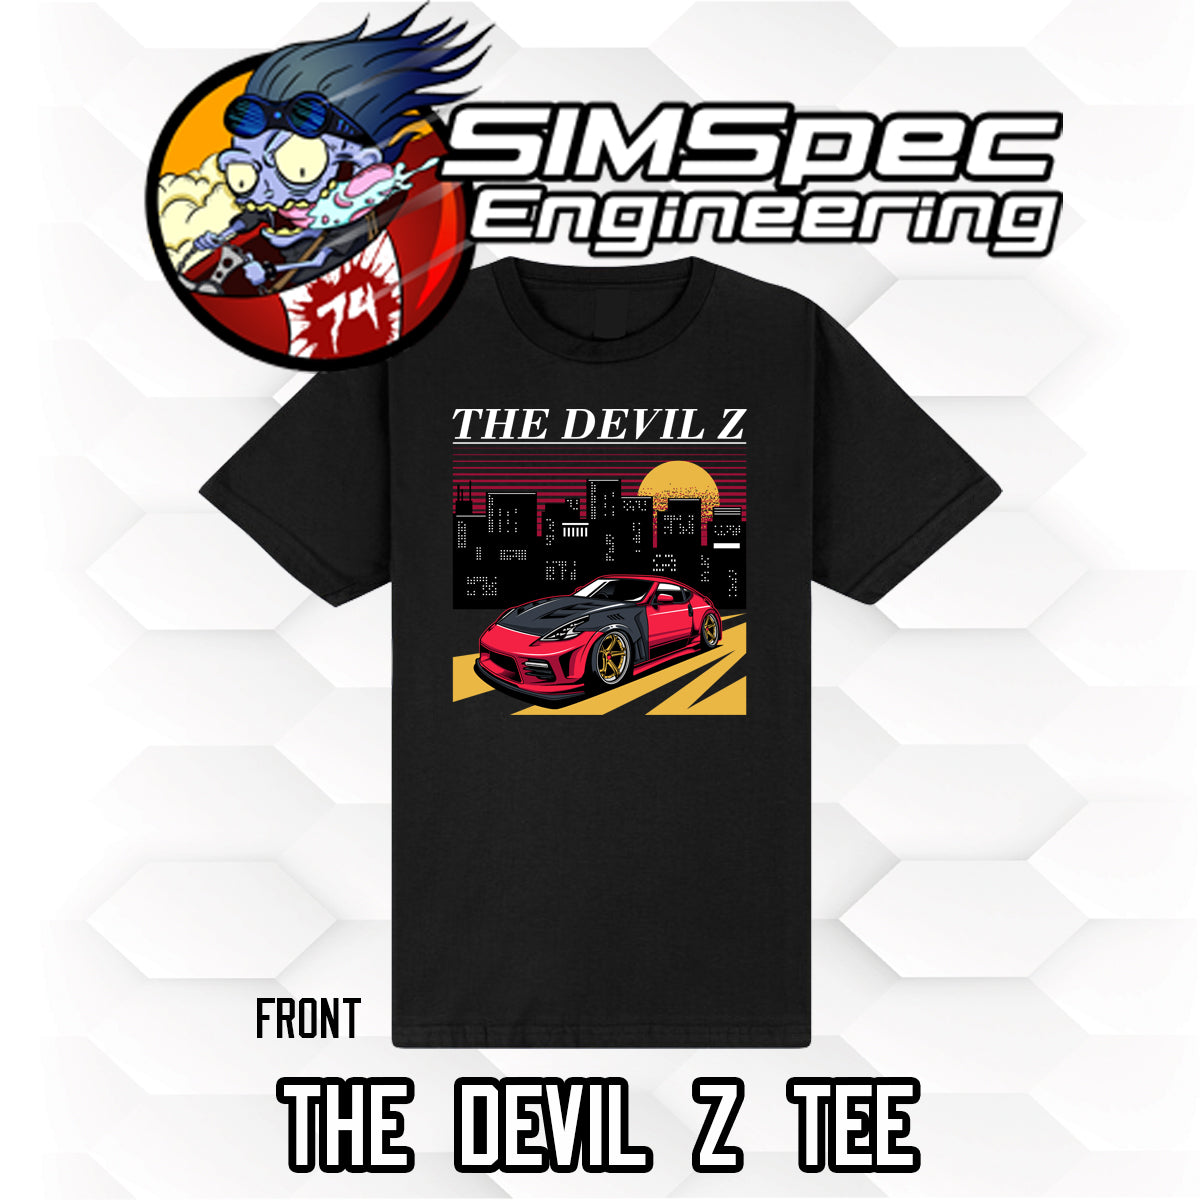 The Devil Z T-Shirt